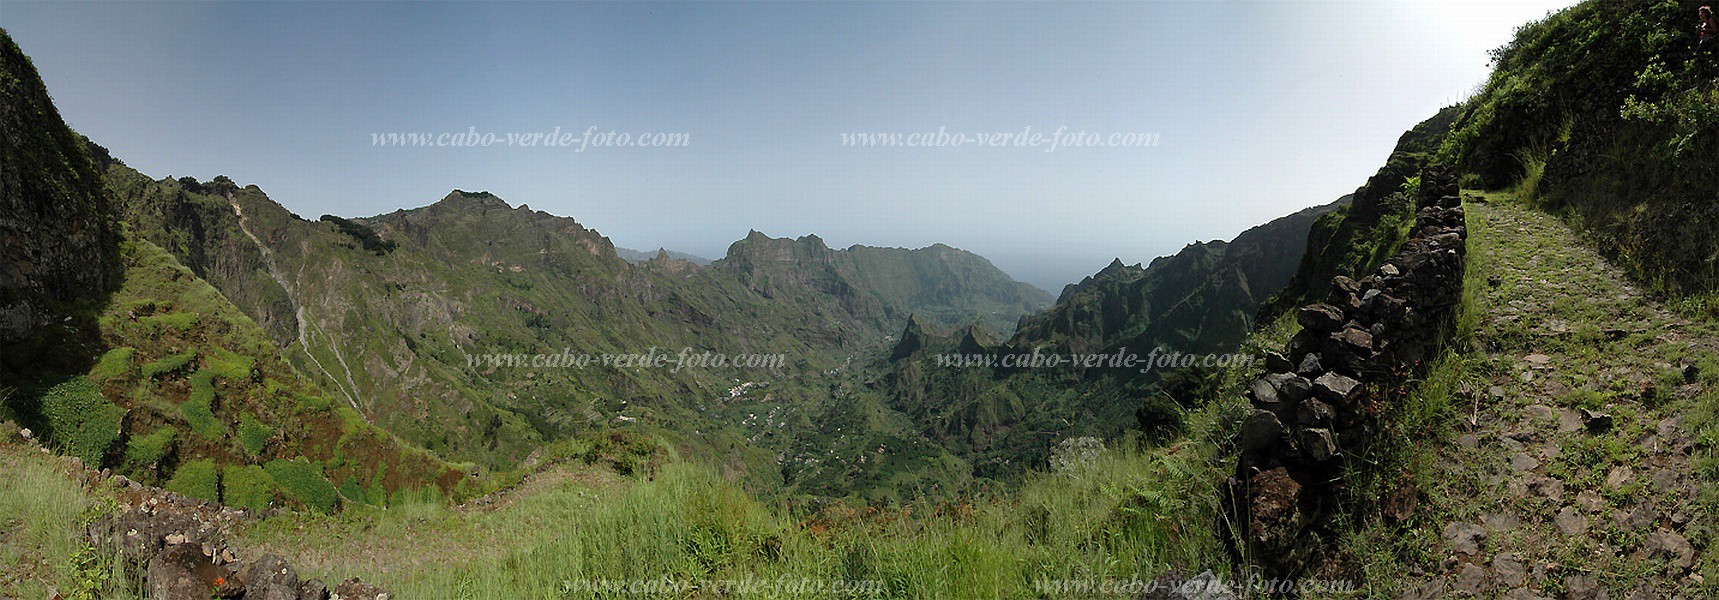 Santo Anto : Cabo da Ribeira Pal : hiking trail : LandscapeCabo Verde Foto Gallery